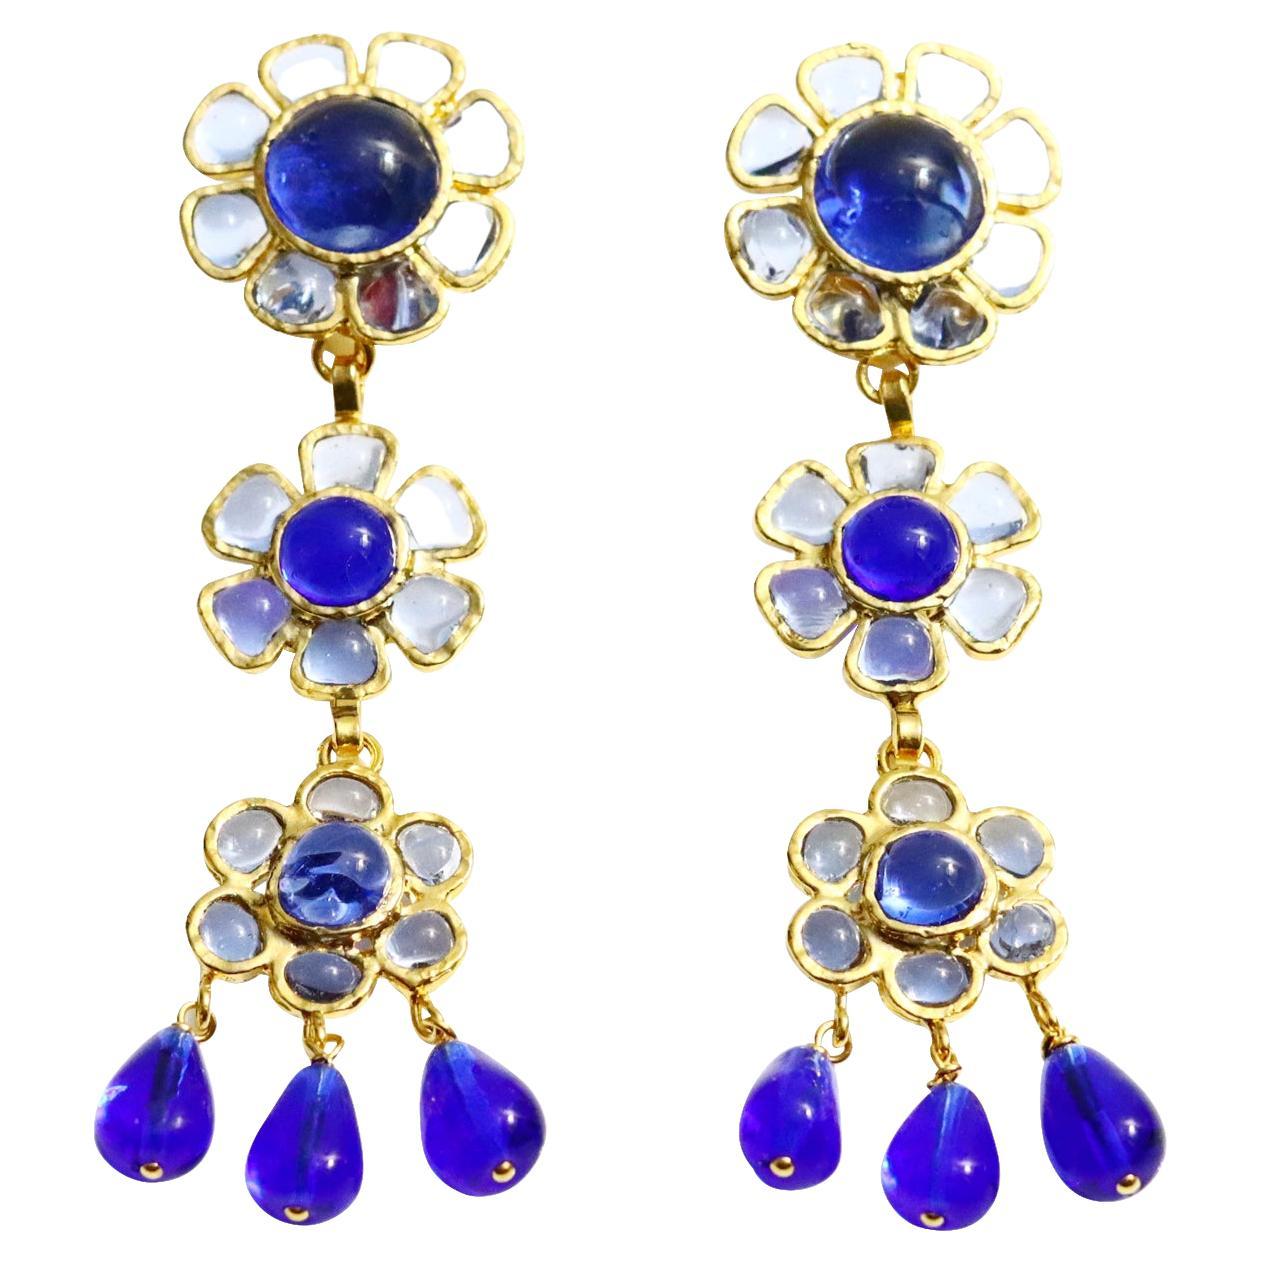 Maison Gripoix Vintage Blue and Light Blue Flower Dangling Earrings Circa 1980s